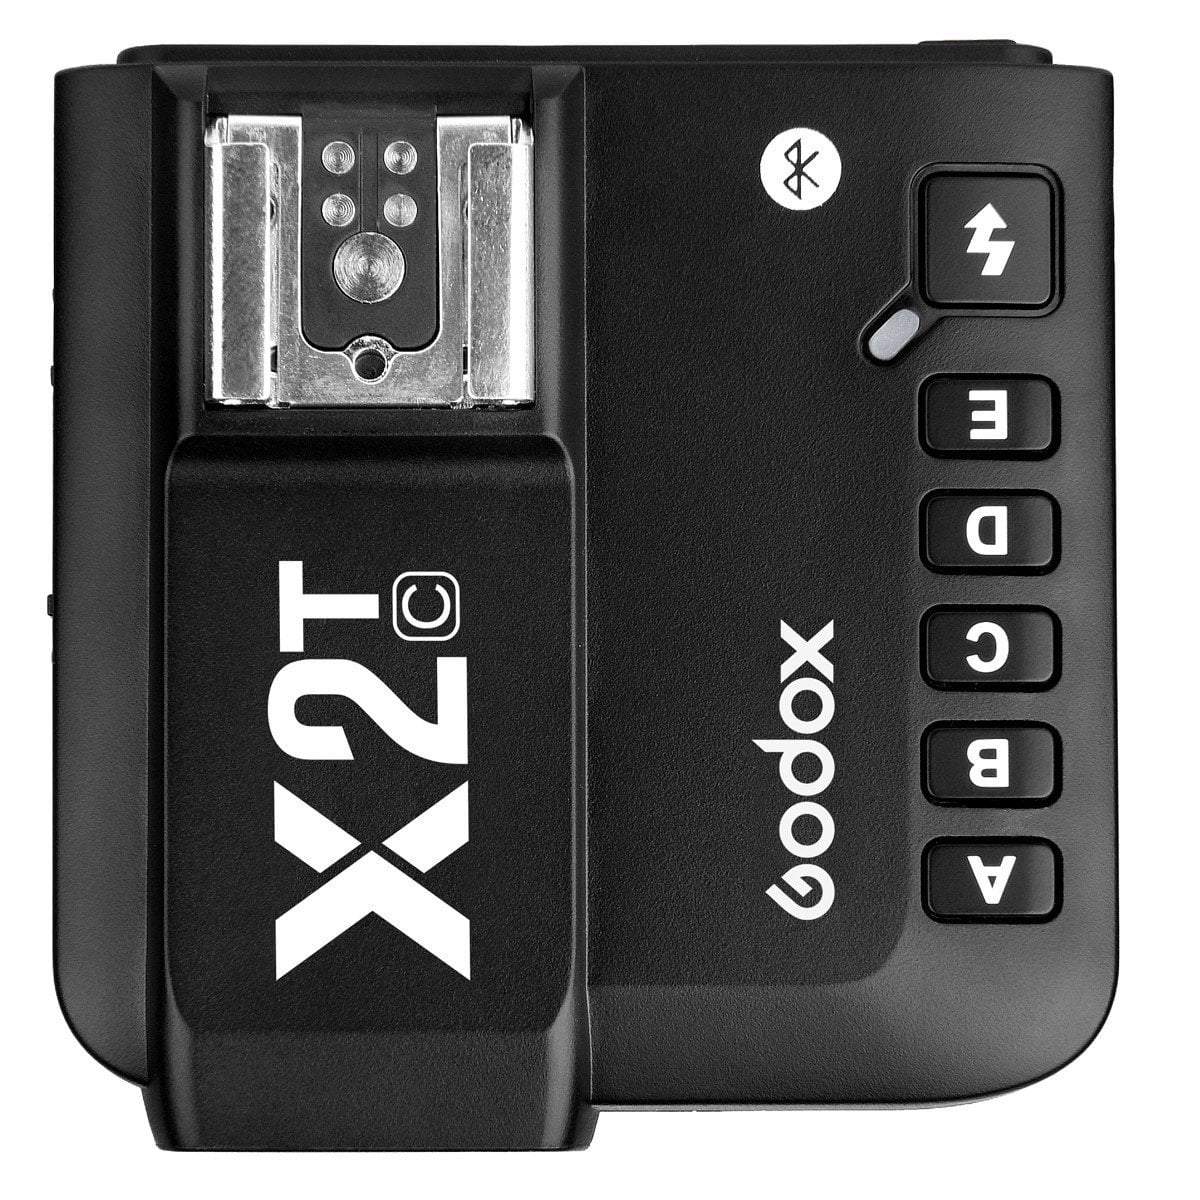 Strobepro Godox X2T-C TTL Wireless Radio Trigger Controller - Canon - Strobepro Studio Lighting